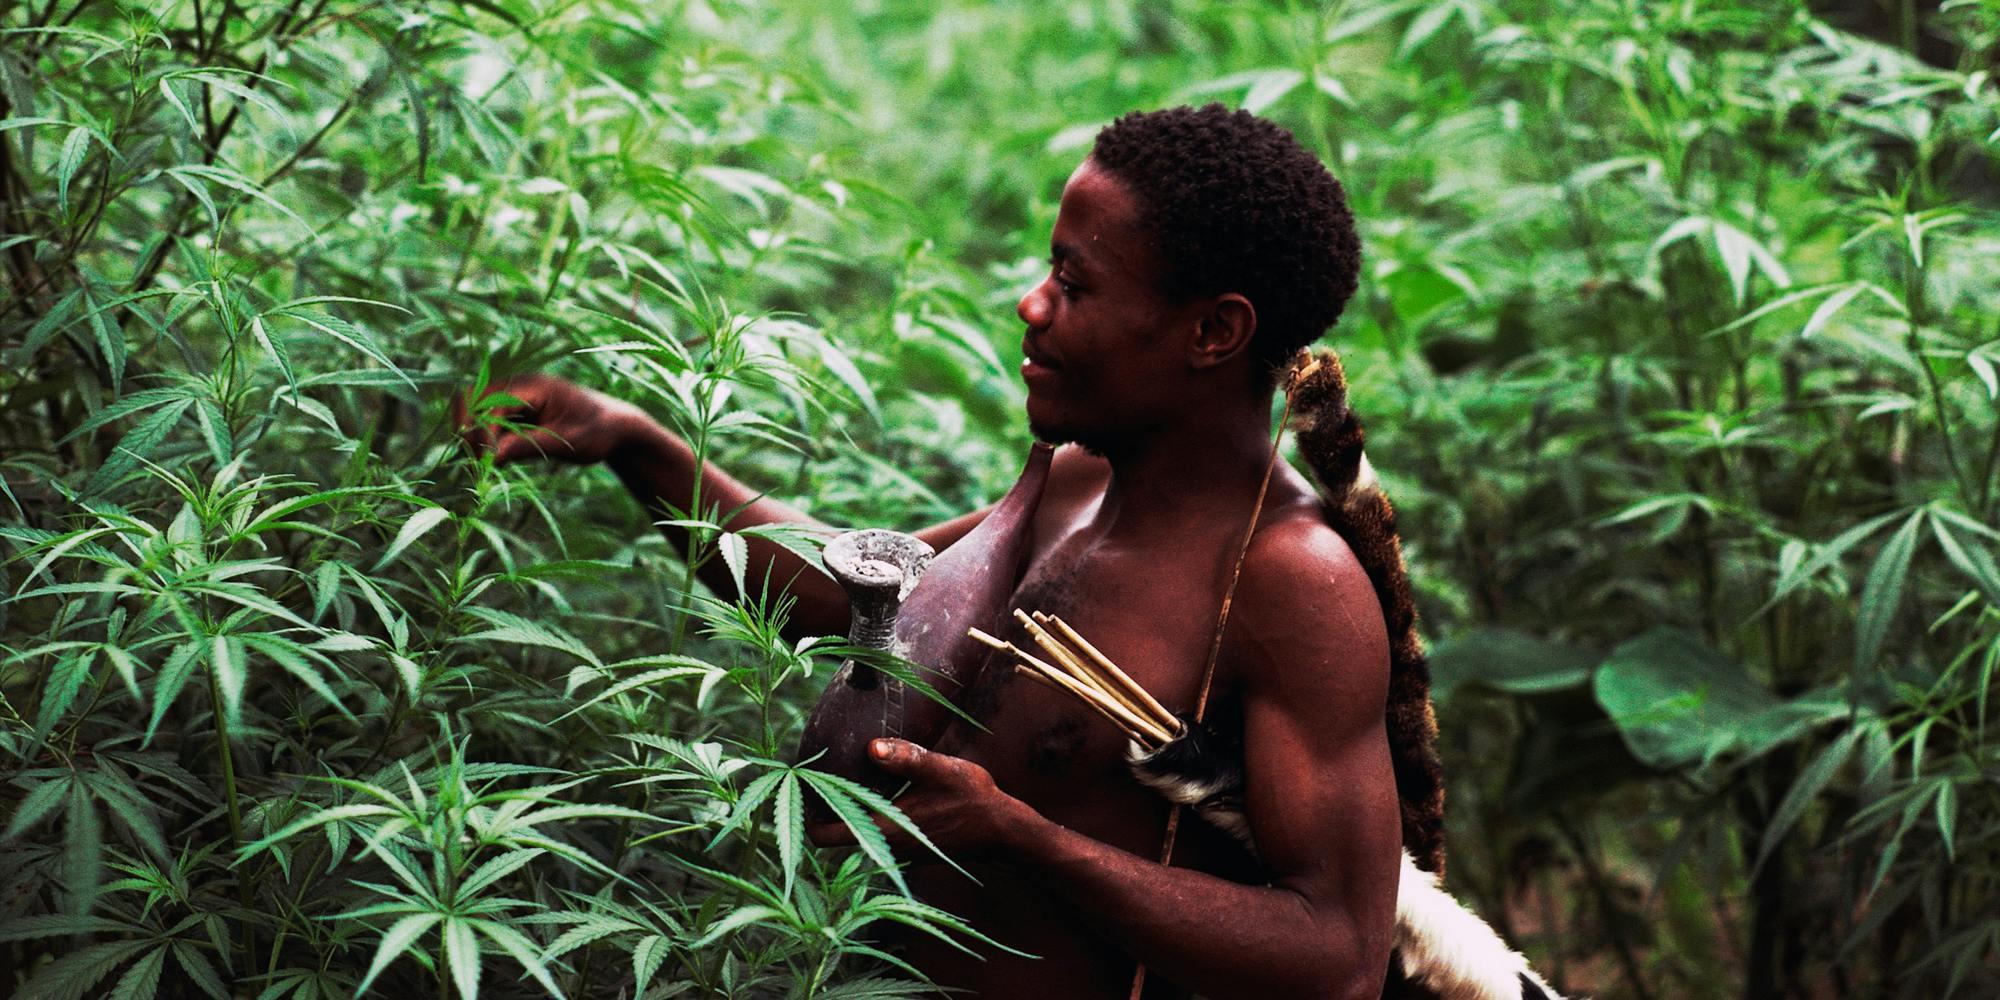 Marijuana is a new cash crop in the Democratic Republic of Congo